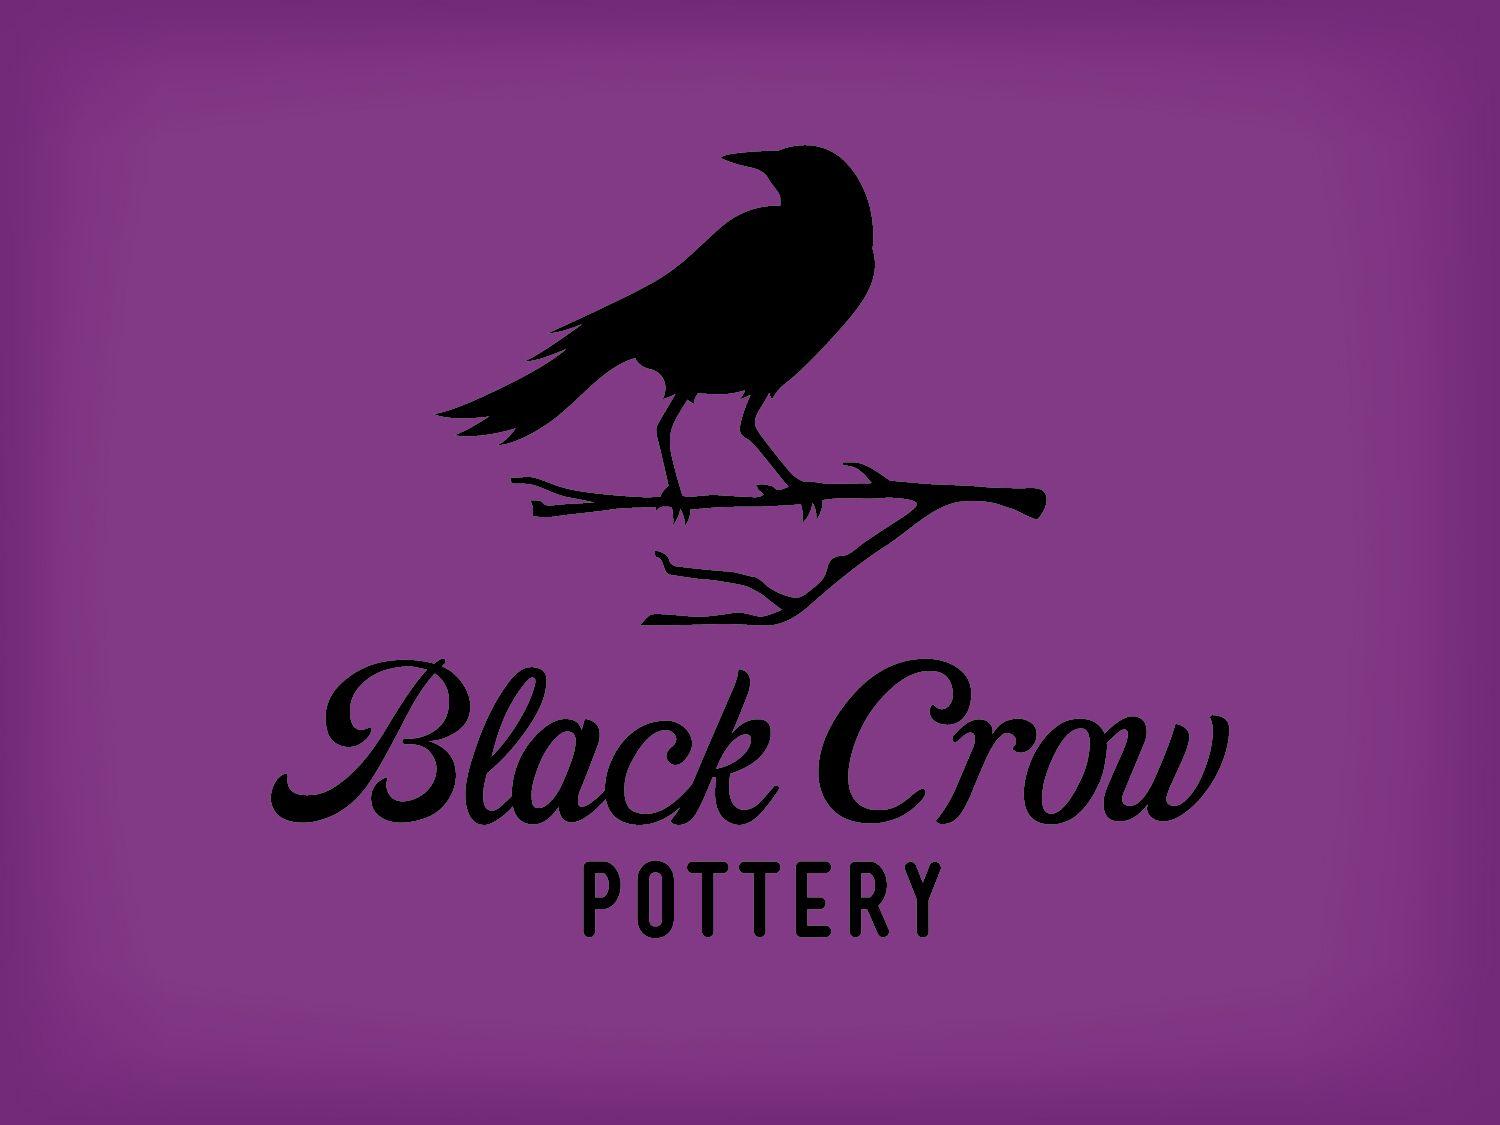 Black Crow Logo - Eric Miller » Black Crow Pottery Logo